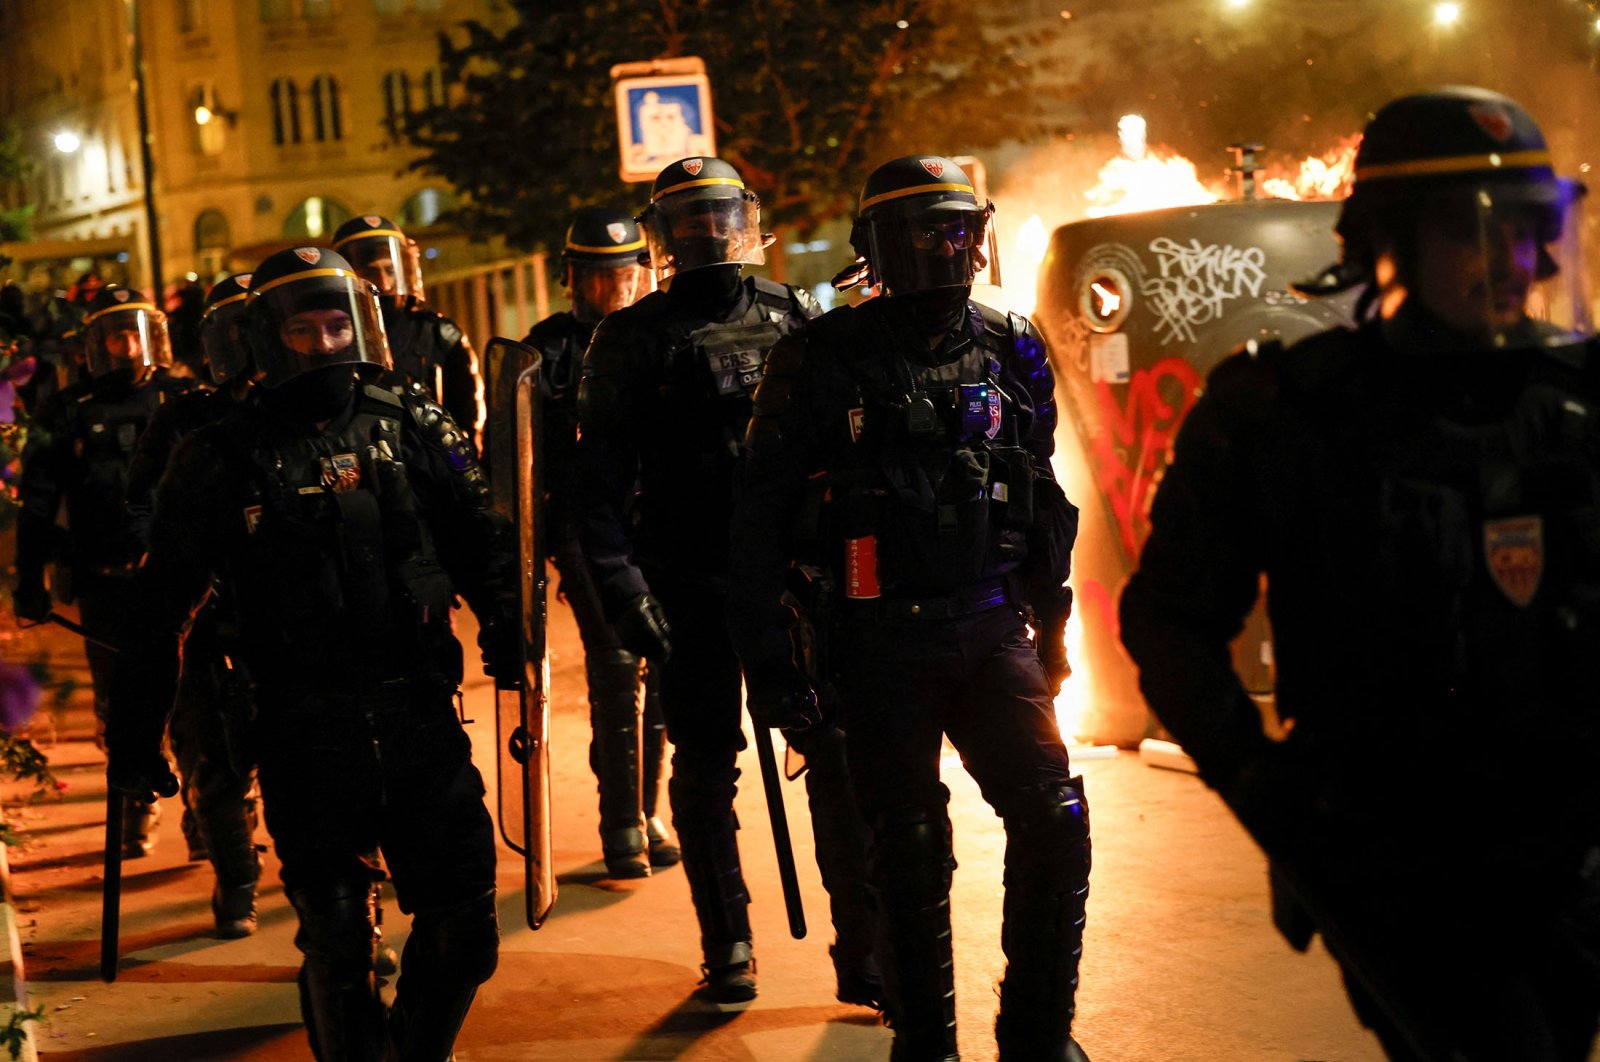 Lebih dari 1.300 ditangkap setelah malam keempat kerusuhan mengguncang Prancis